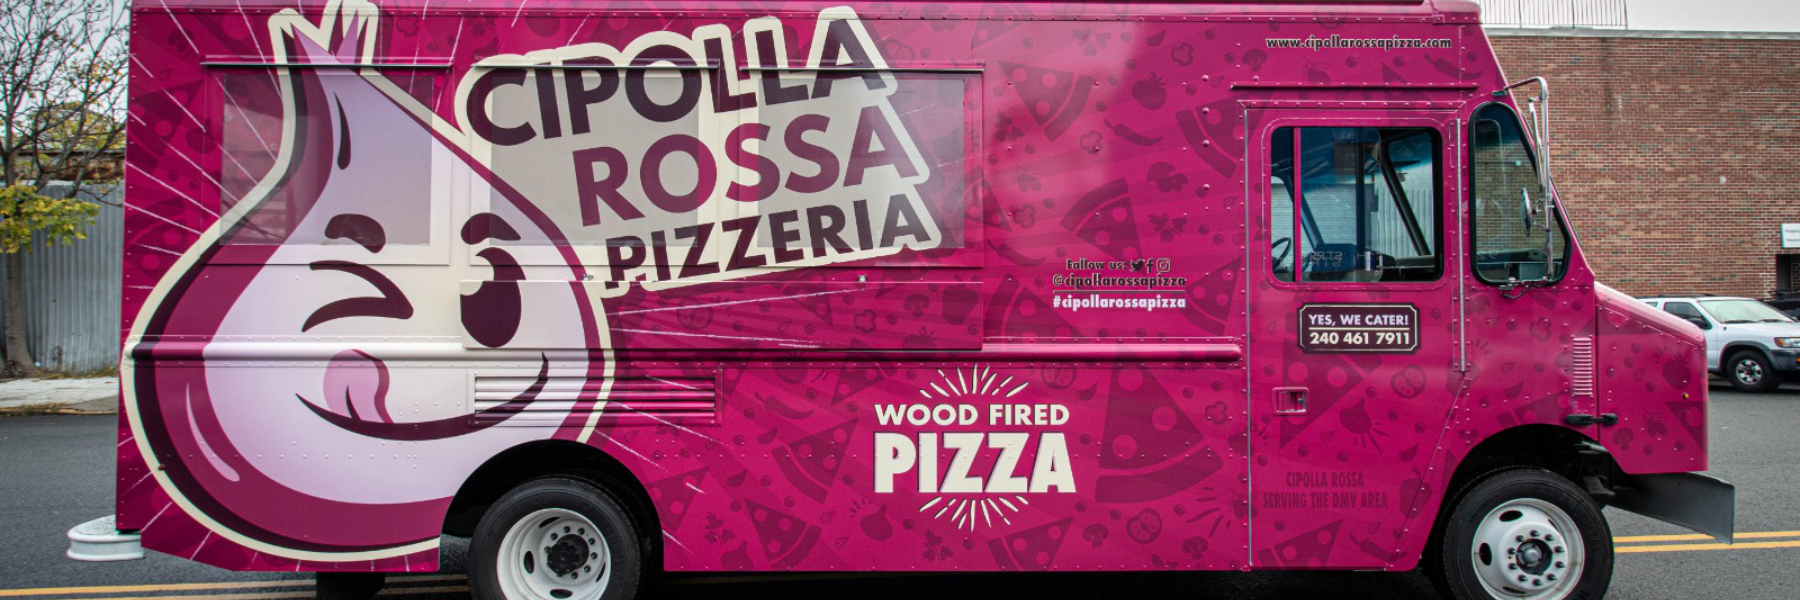 Cipolla Rossa's Pizza Food Truck